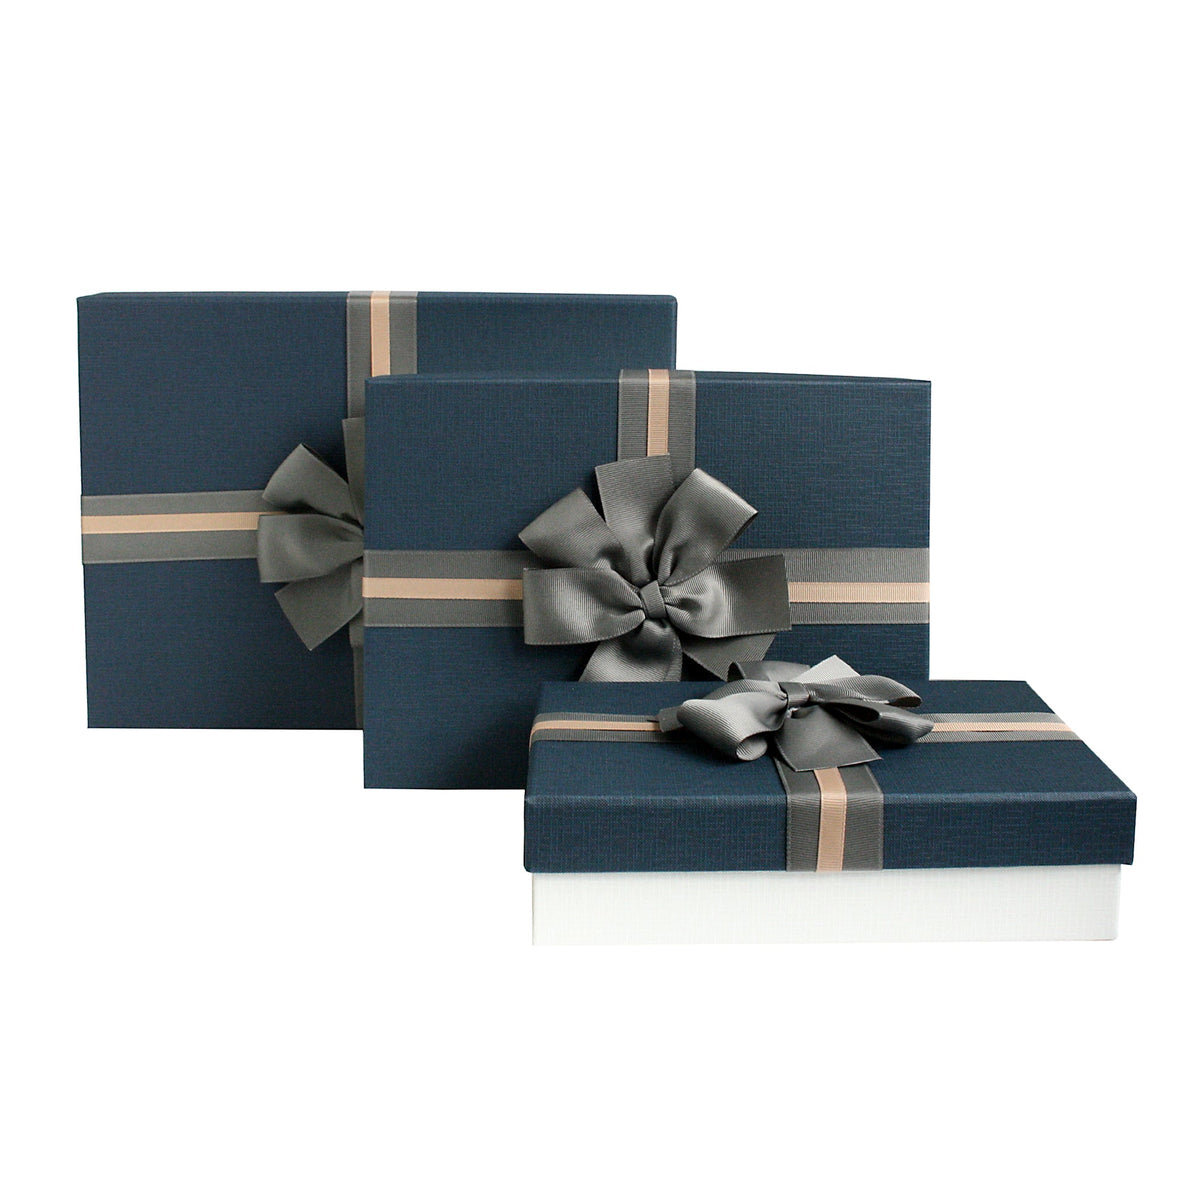 Elegant Cream/Blue Gift Boxes - Set of 3